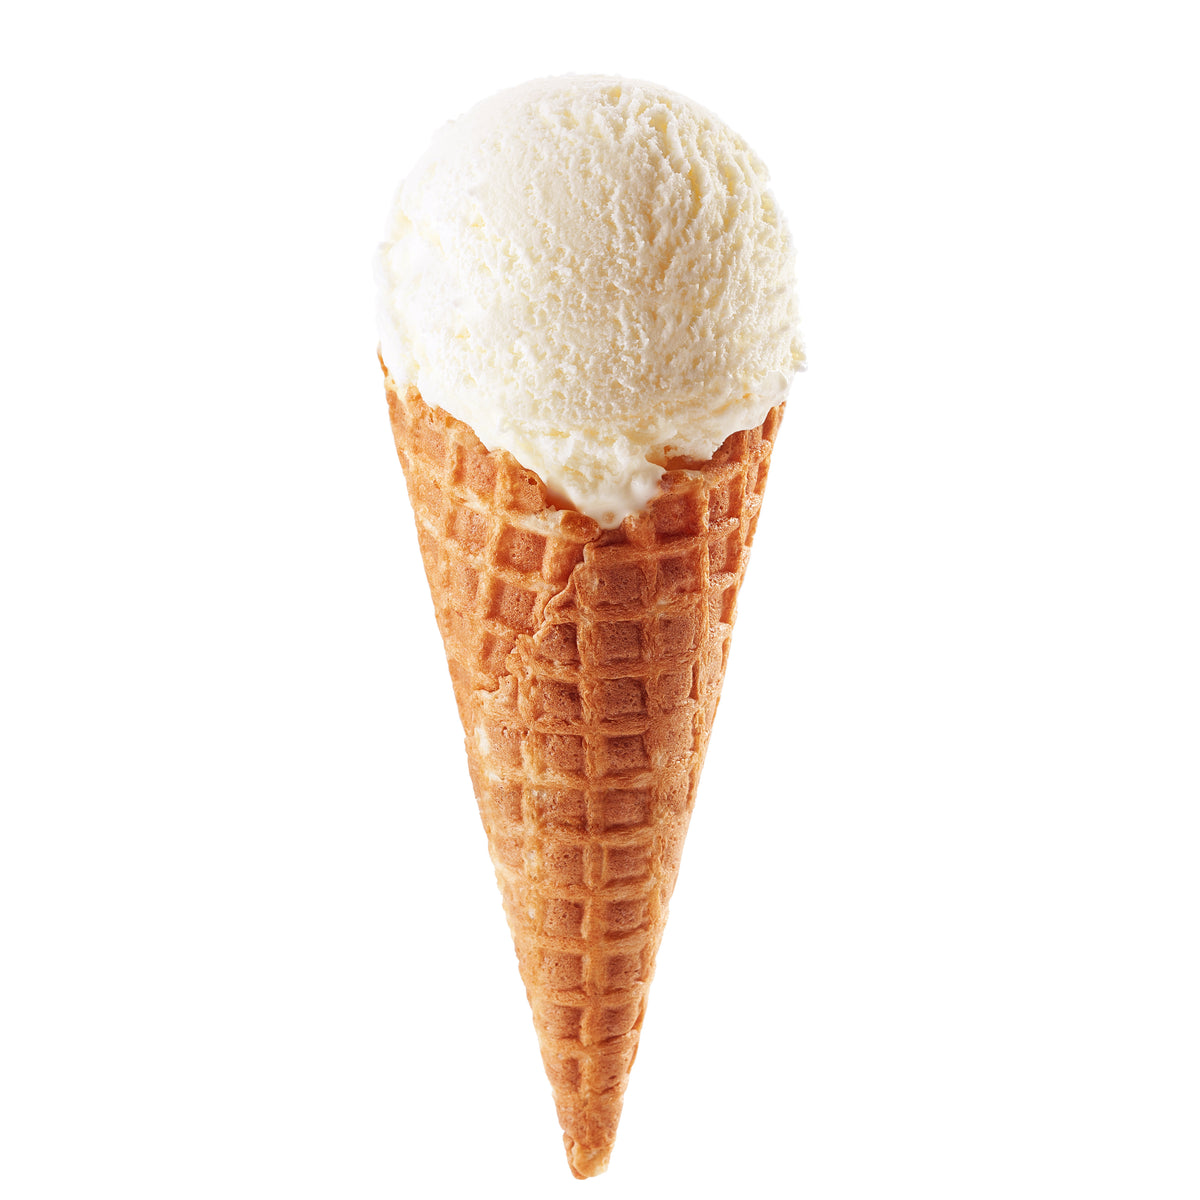 LoLo Premium Keto Ice Cream Base Mix - French Vanilla